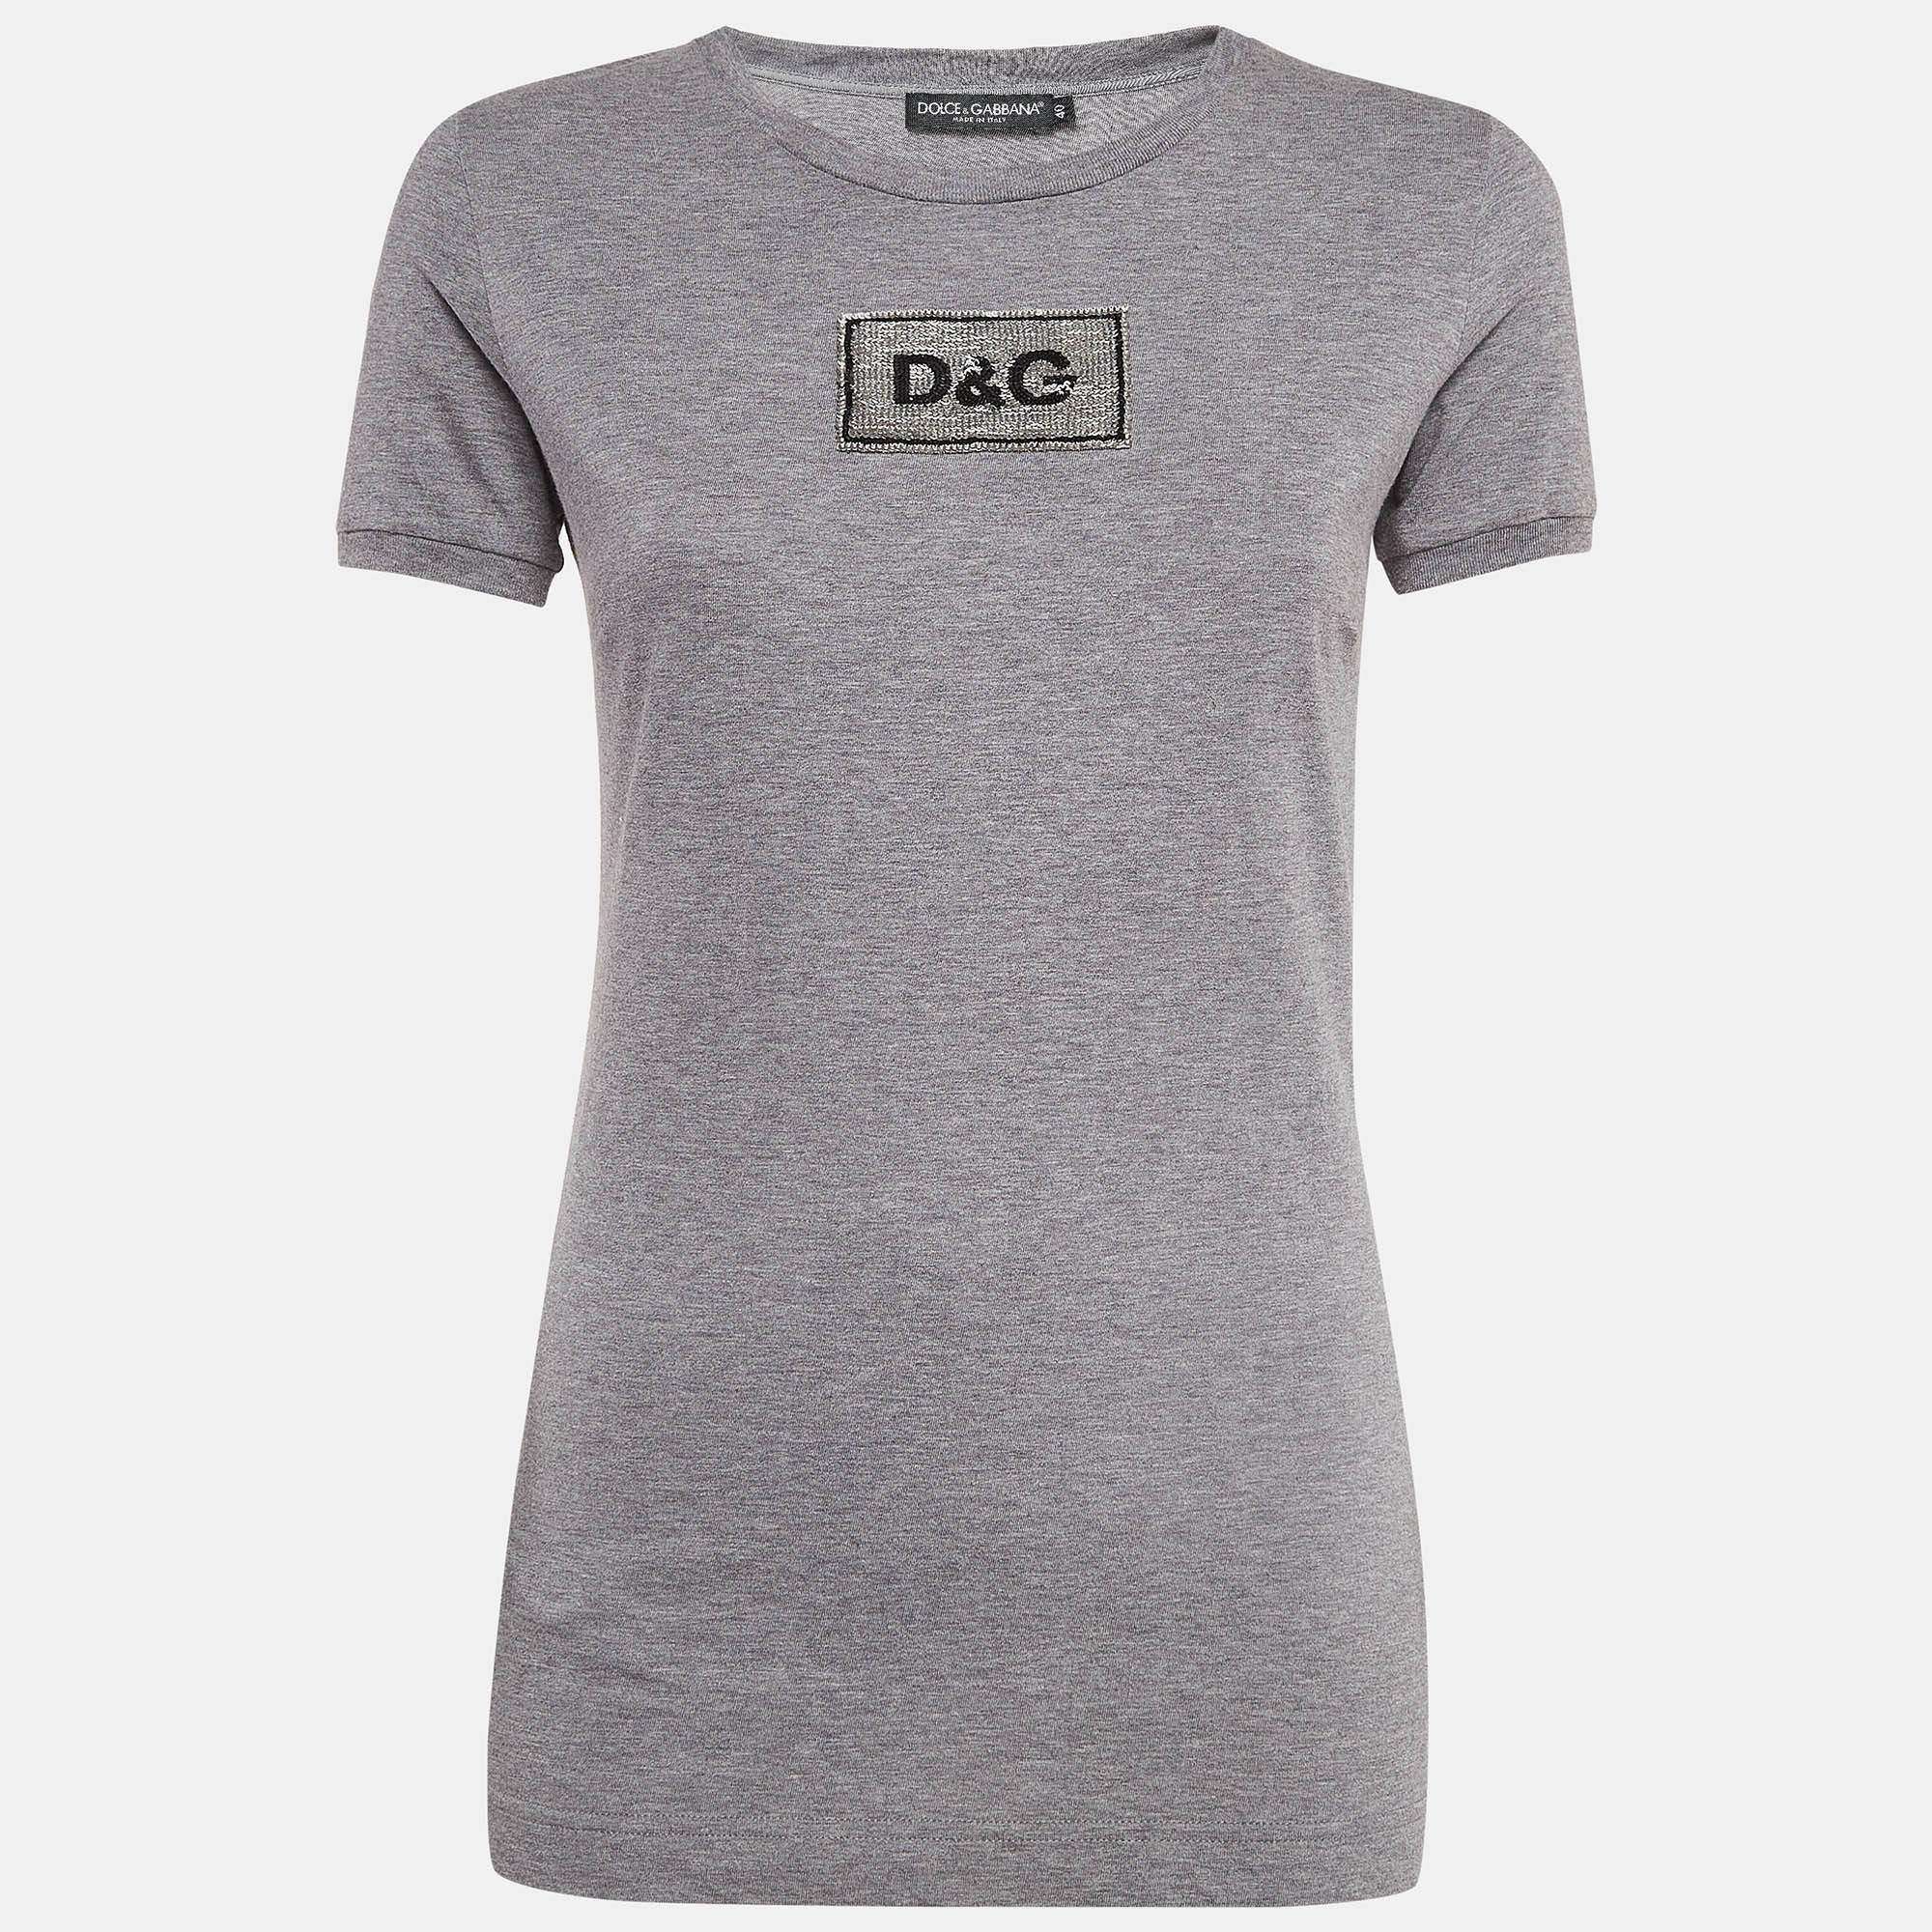 Dolce & gabbana grey logo embellished cotton knit t-shirt s